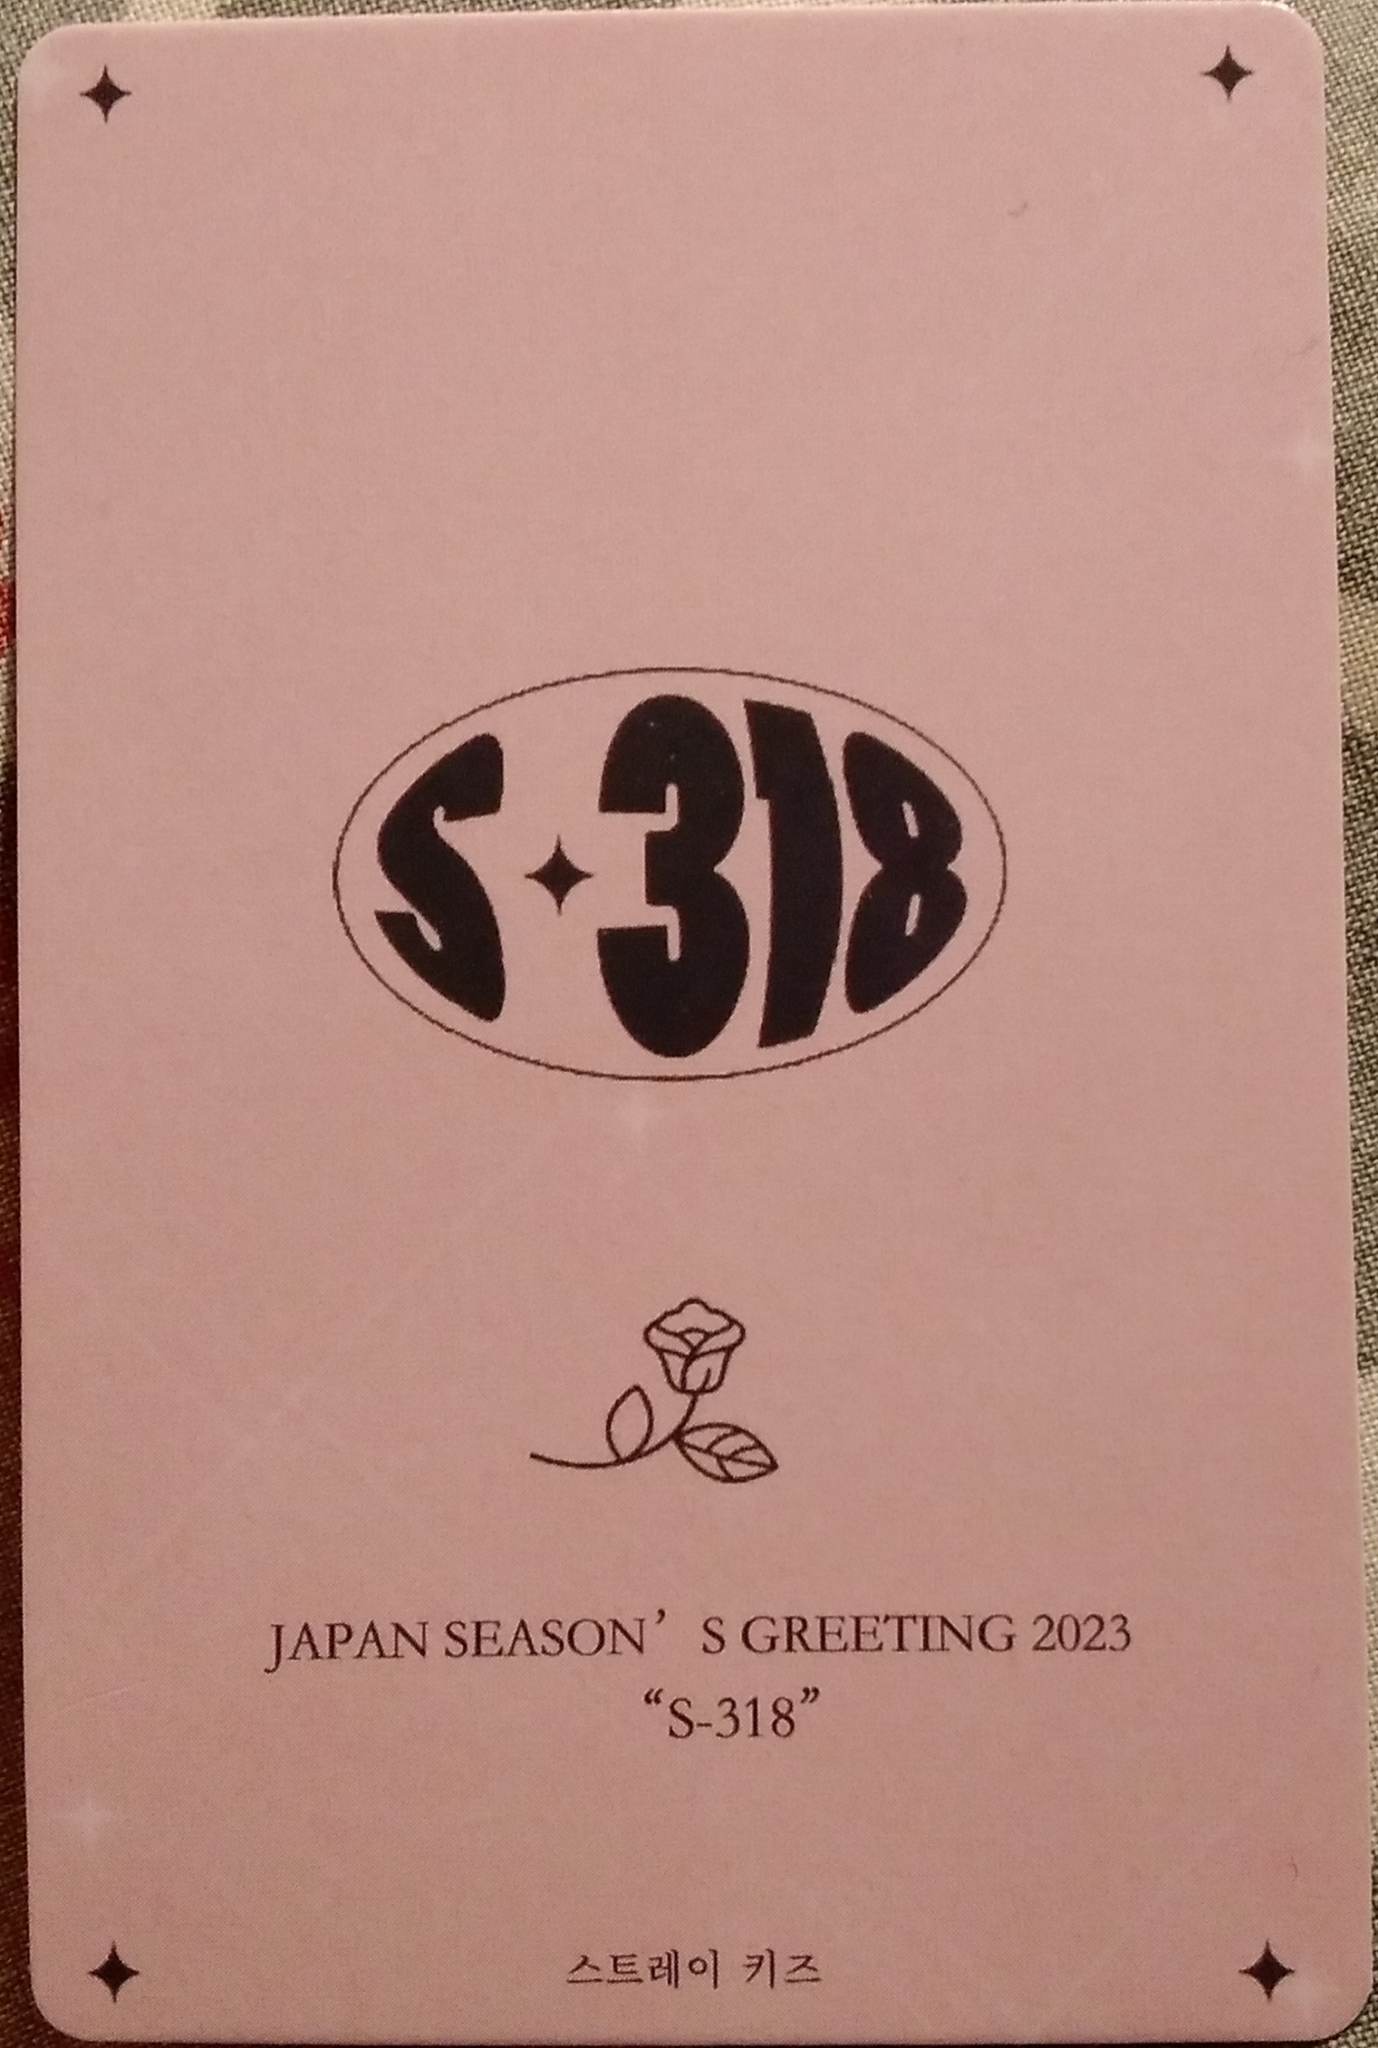 Photocard  STRAYKIDS  Japan season s greetings 2023  "S-318"  Lee felix